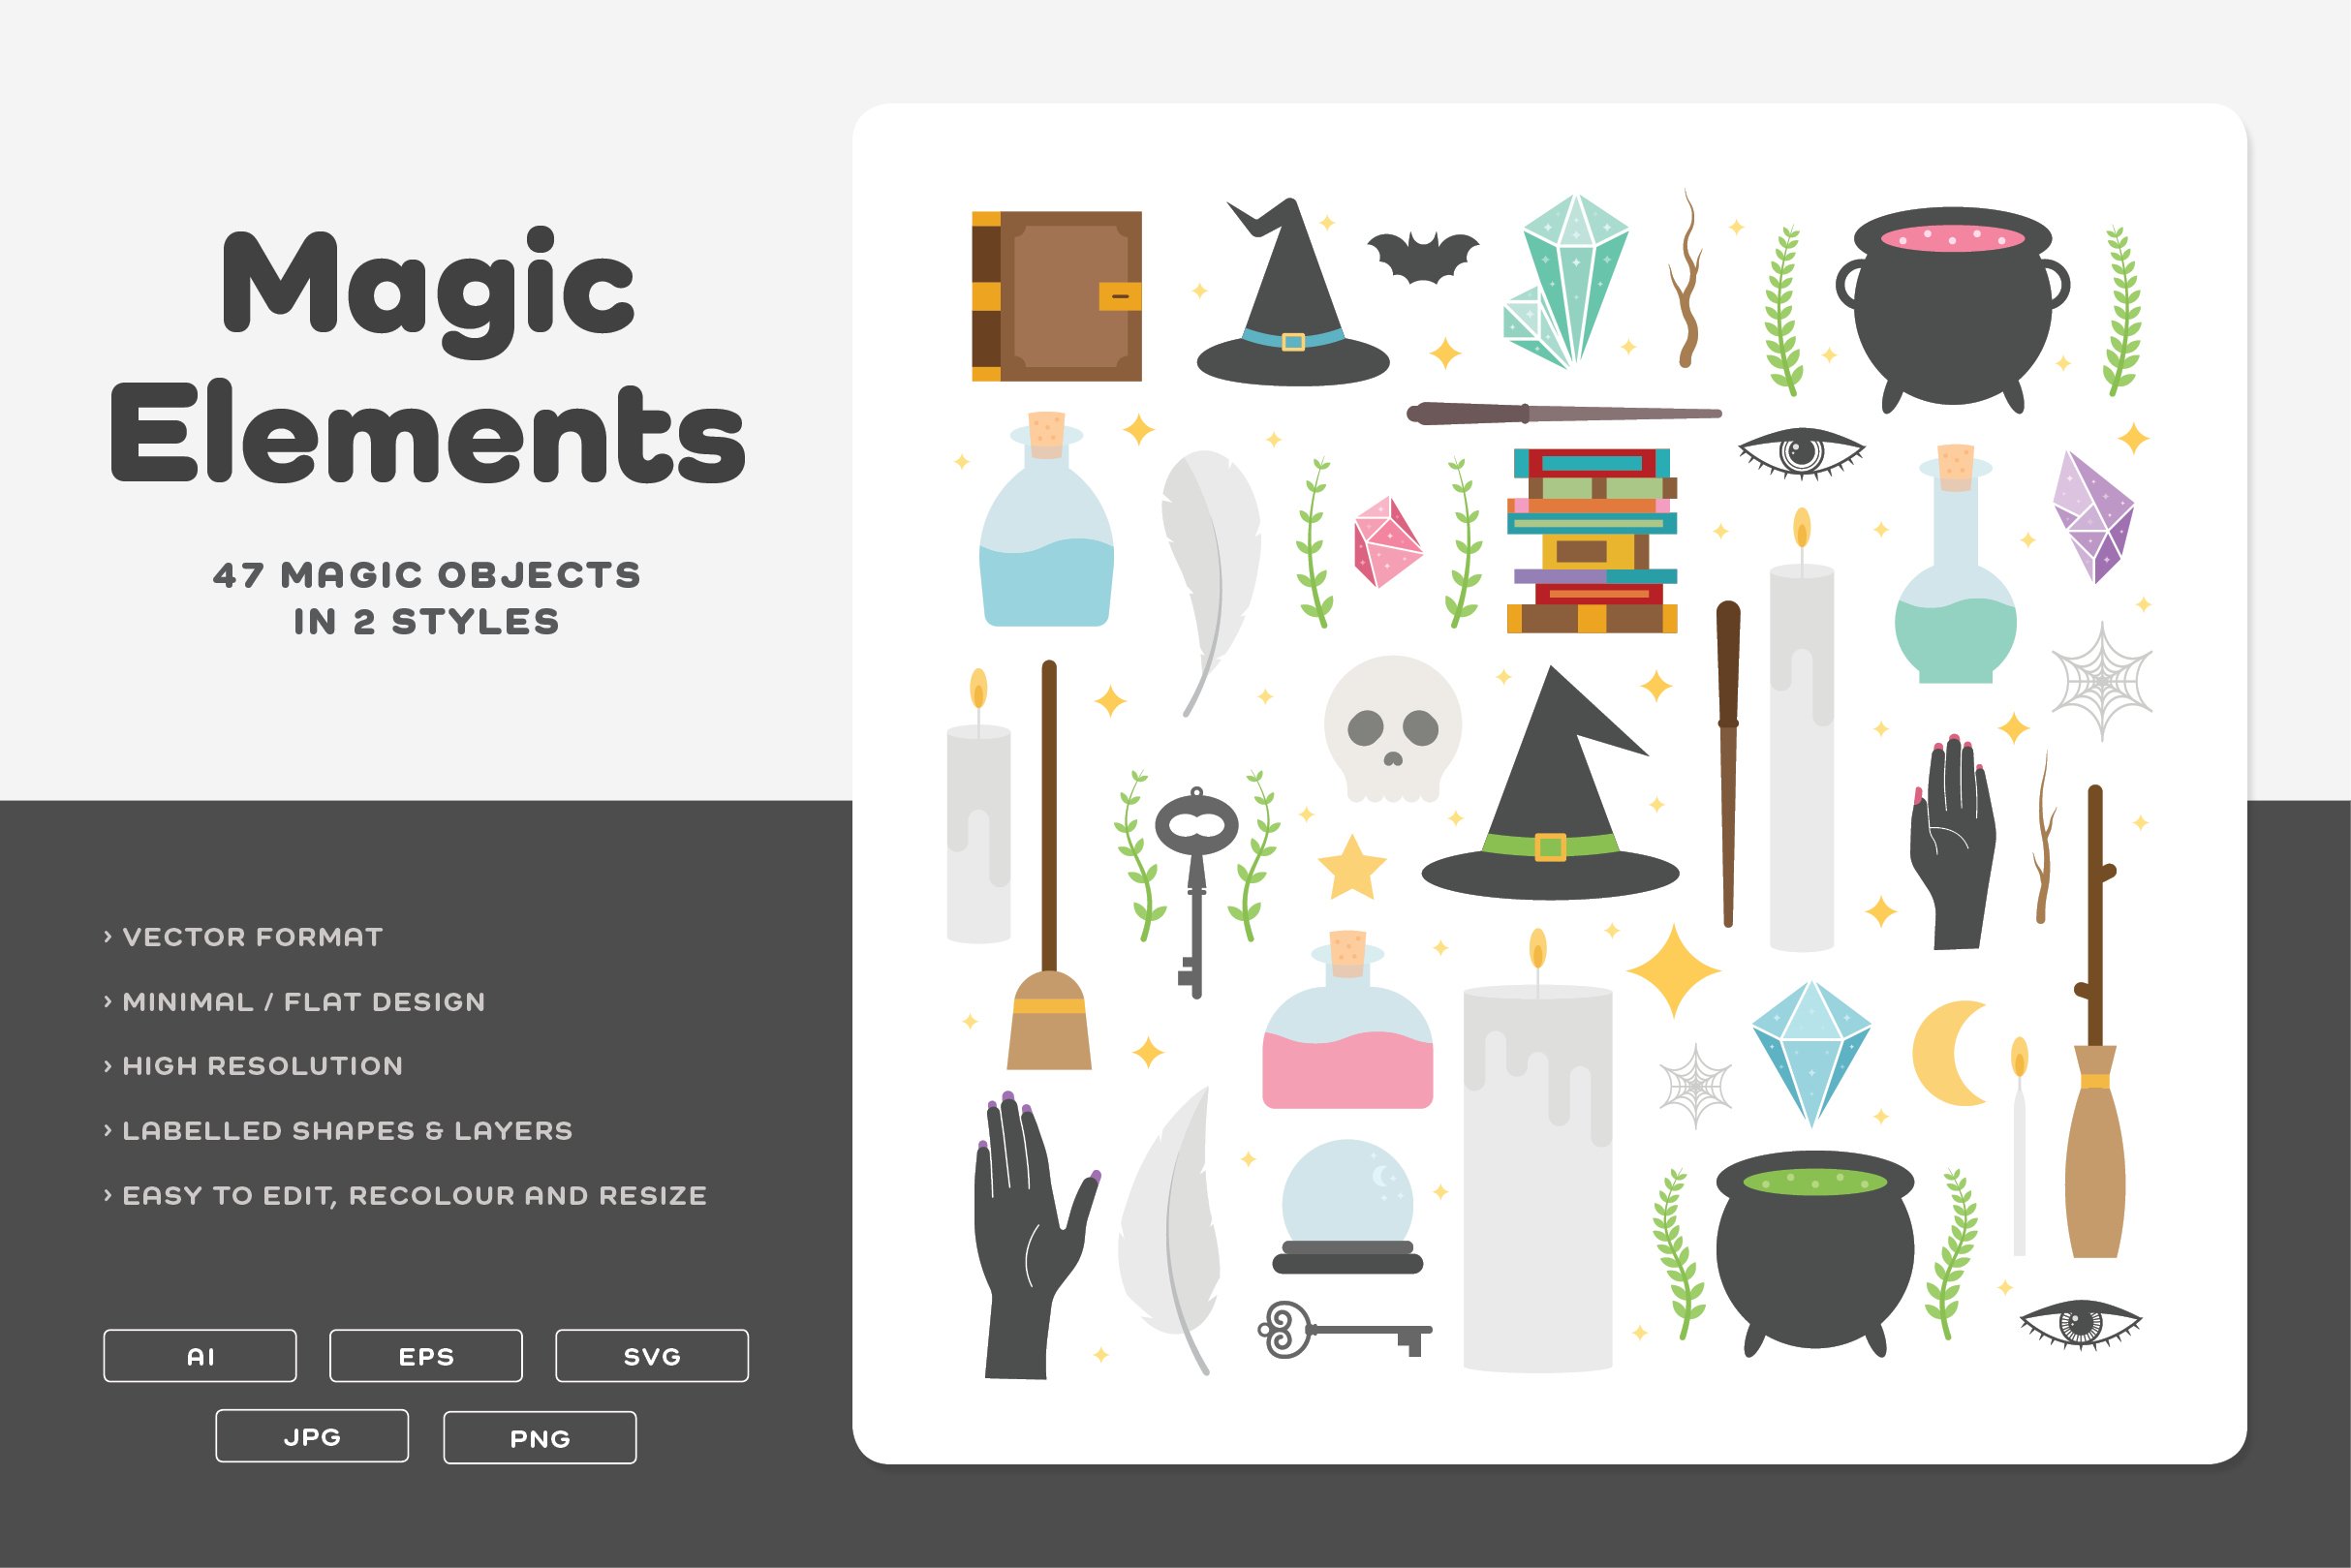 Magic Elements cover image.